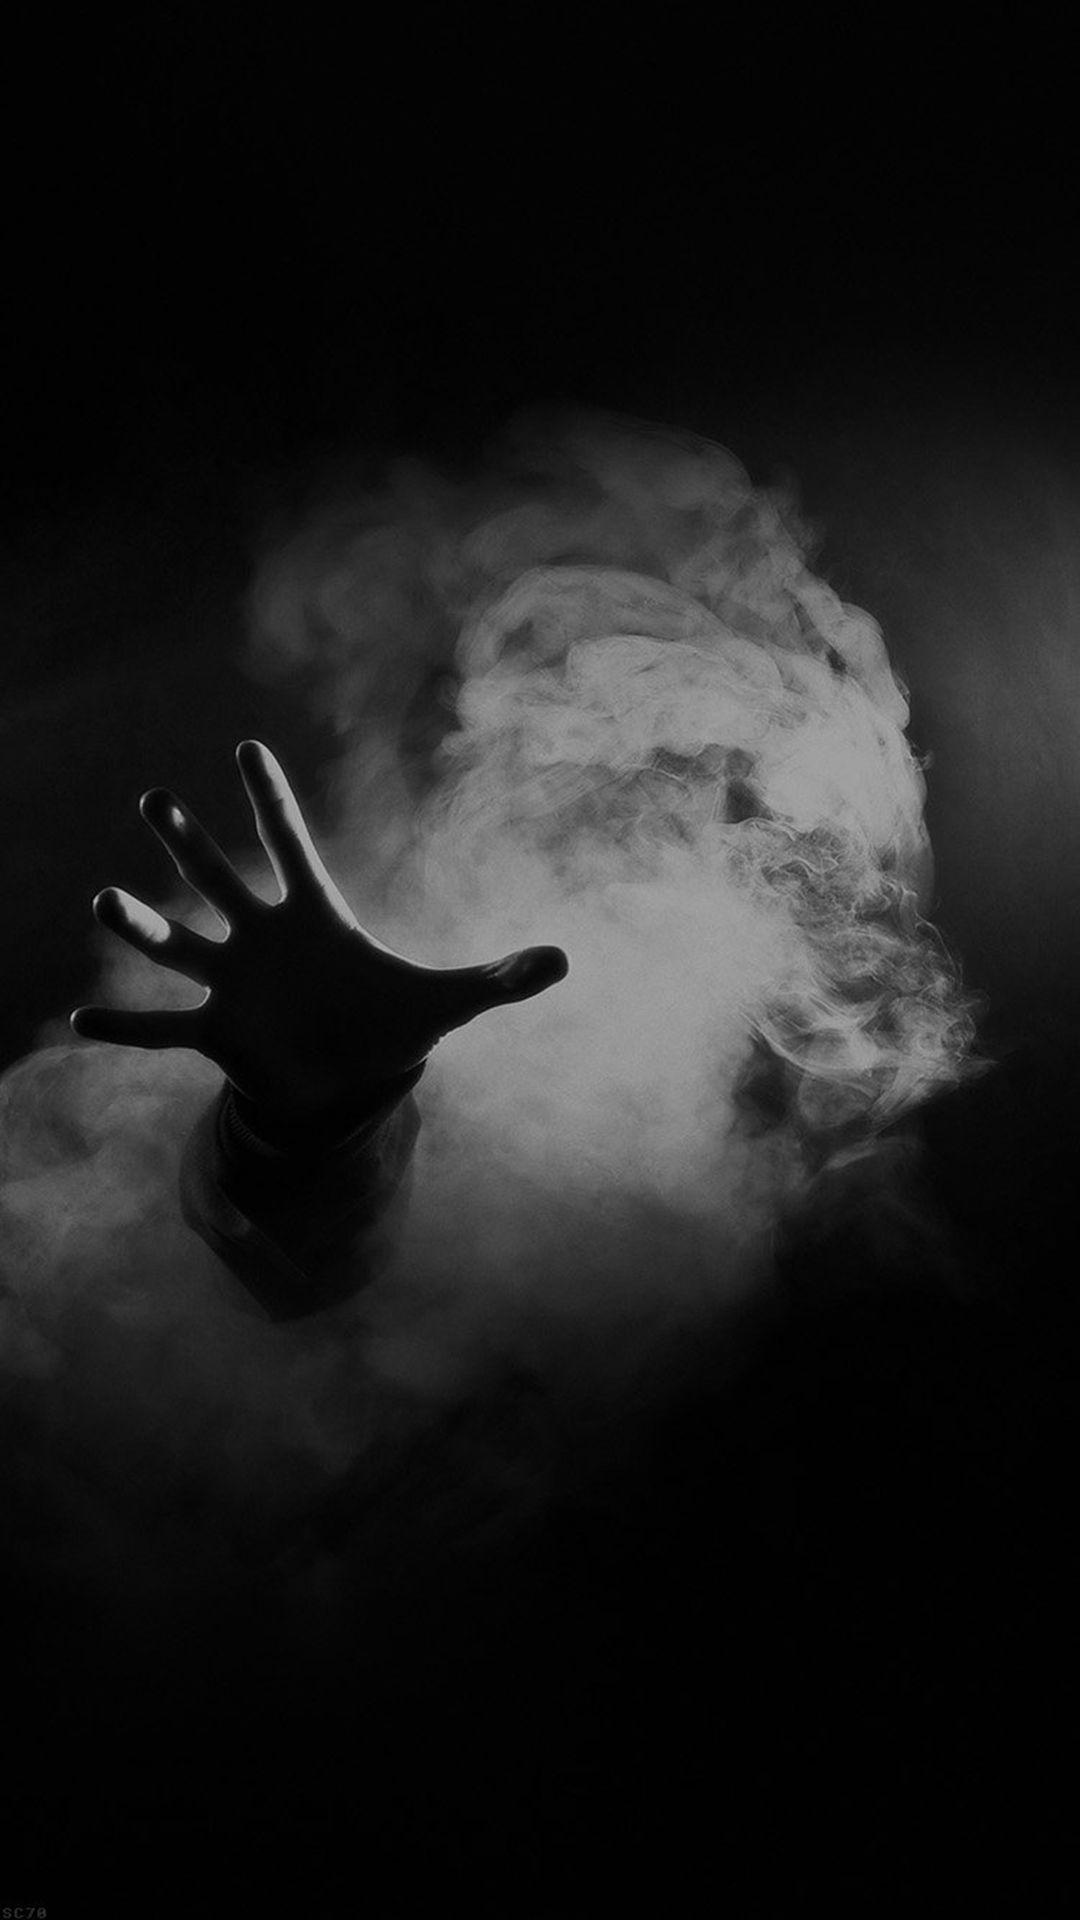 A hand reaching out of the smoke - Smoke